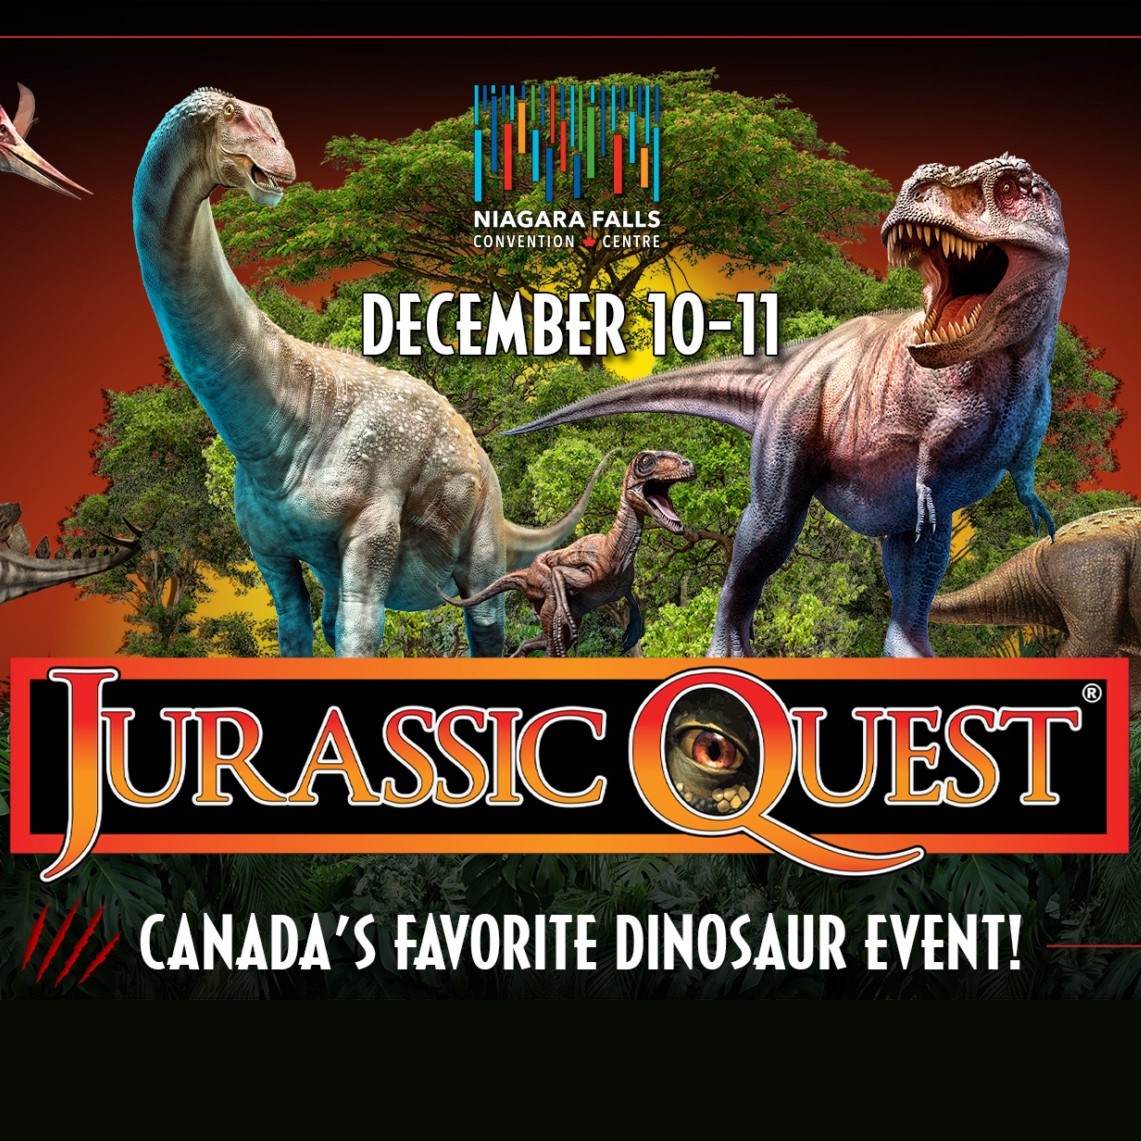 Jurassic Quest Hotel Packages - fallsinfo